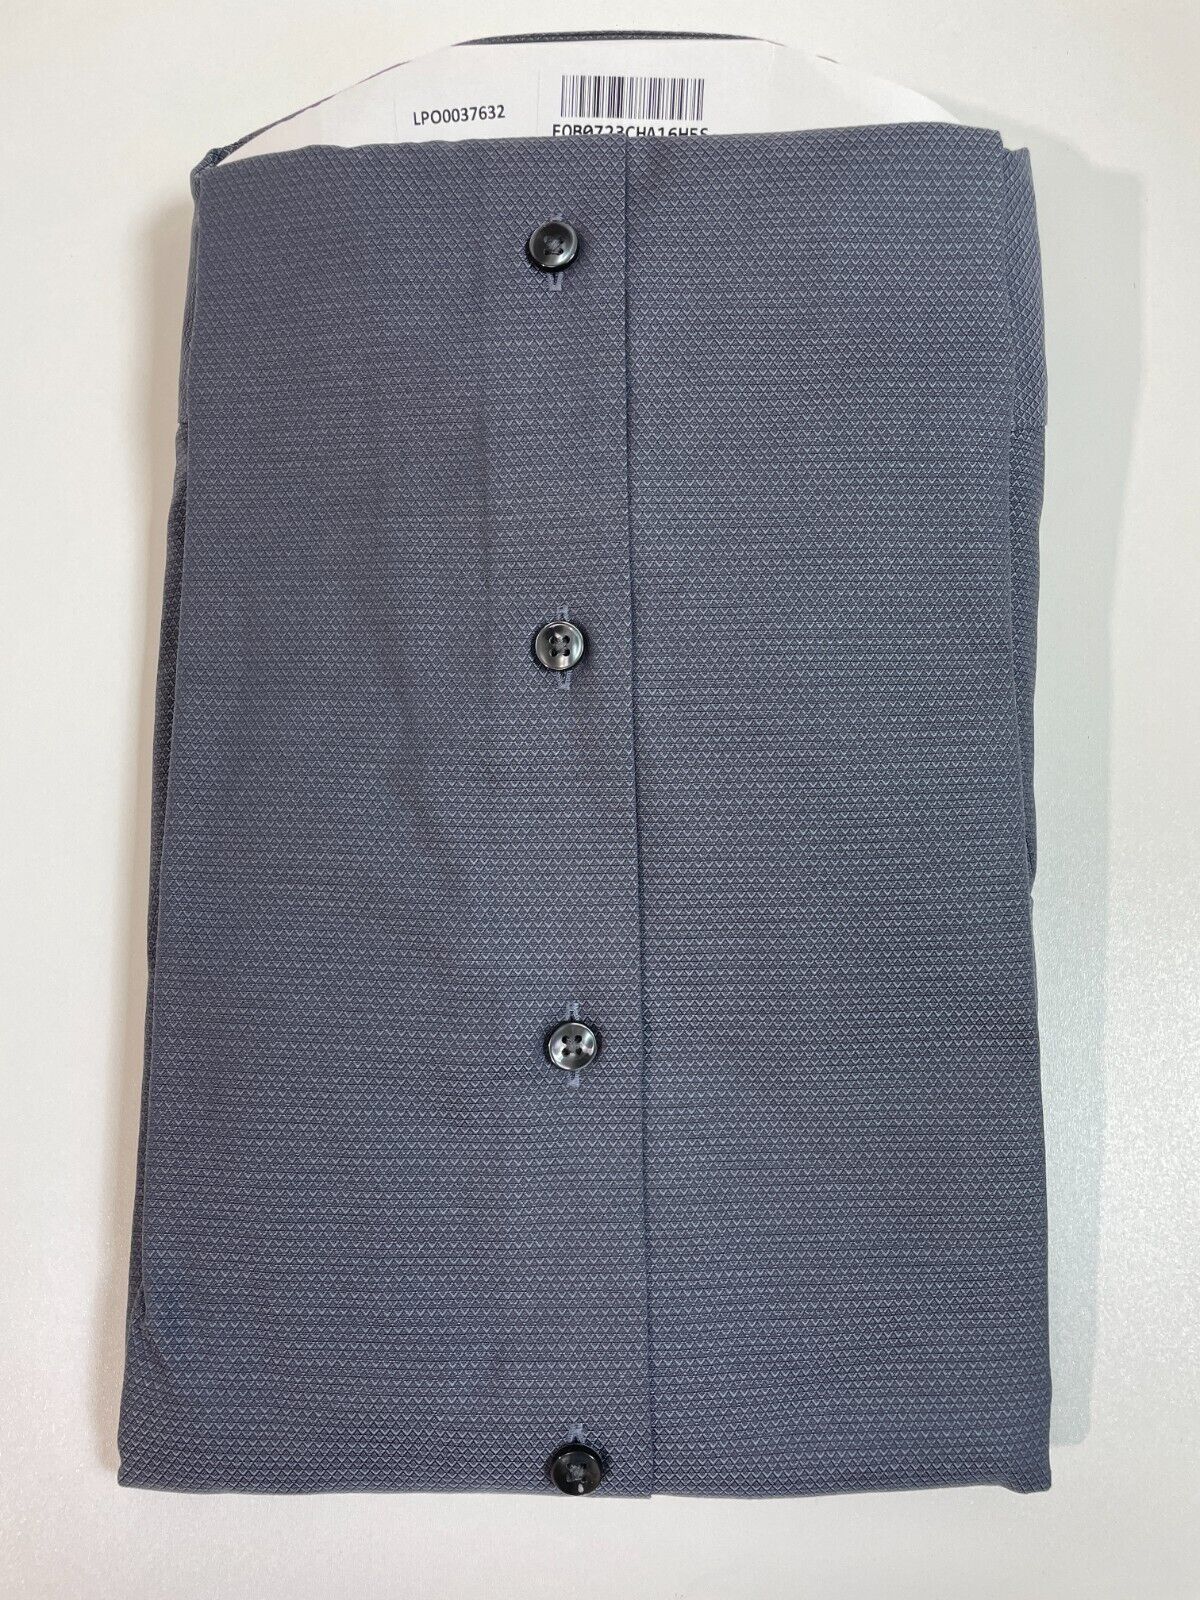 Charles Tyrwhitt Mens 16.5/35 Non-Iron Diamond Stretch Texture Dress Shirt Gray